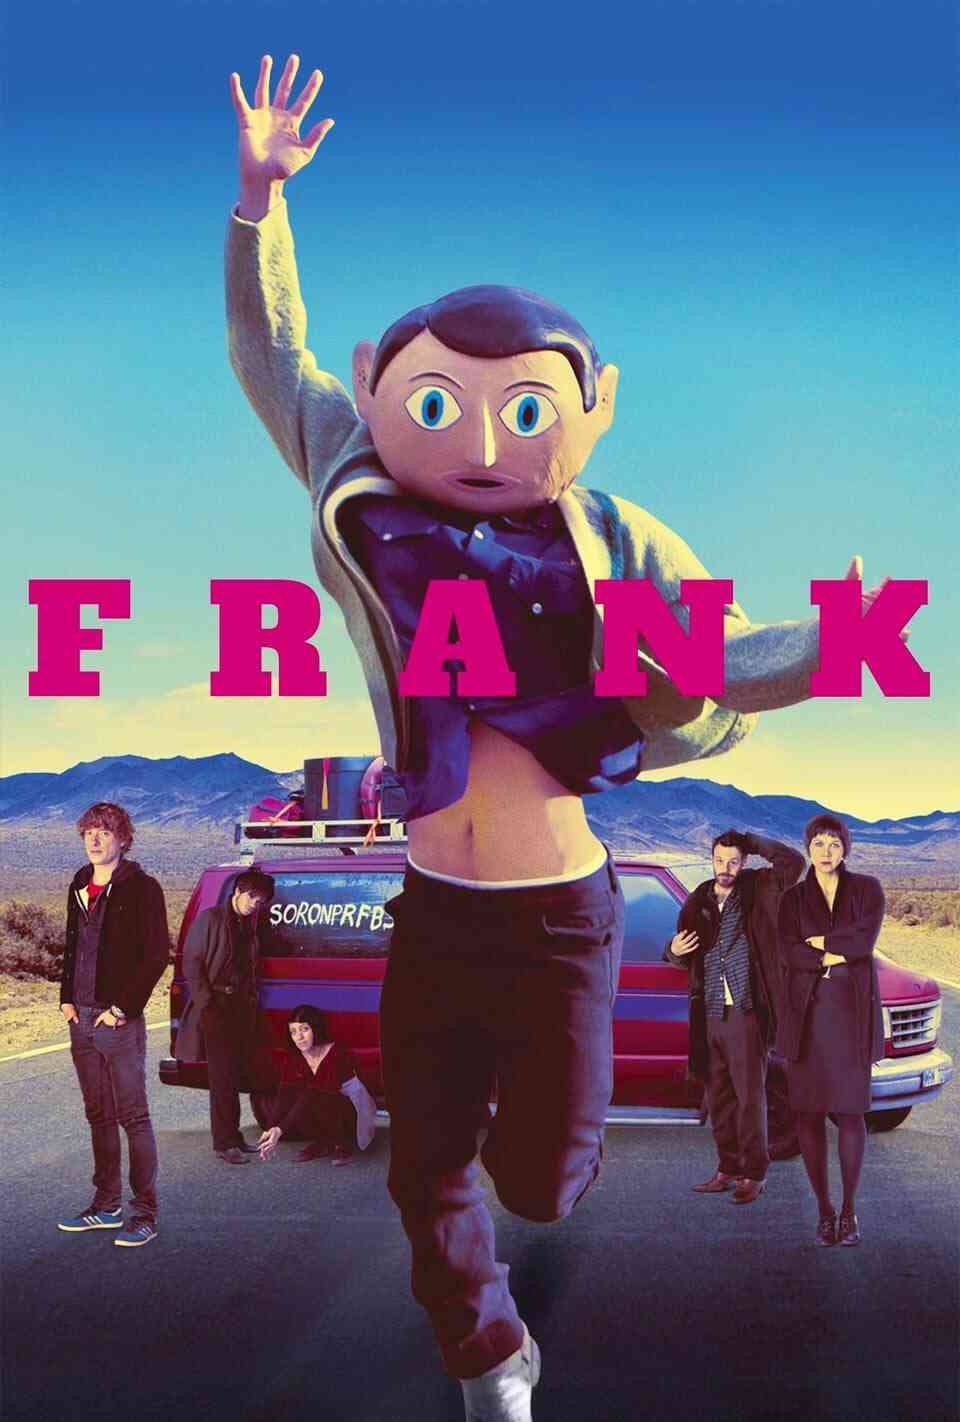 Read Frank screenplay (poster)